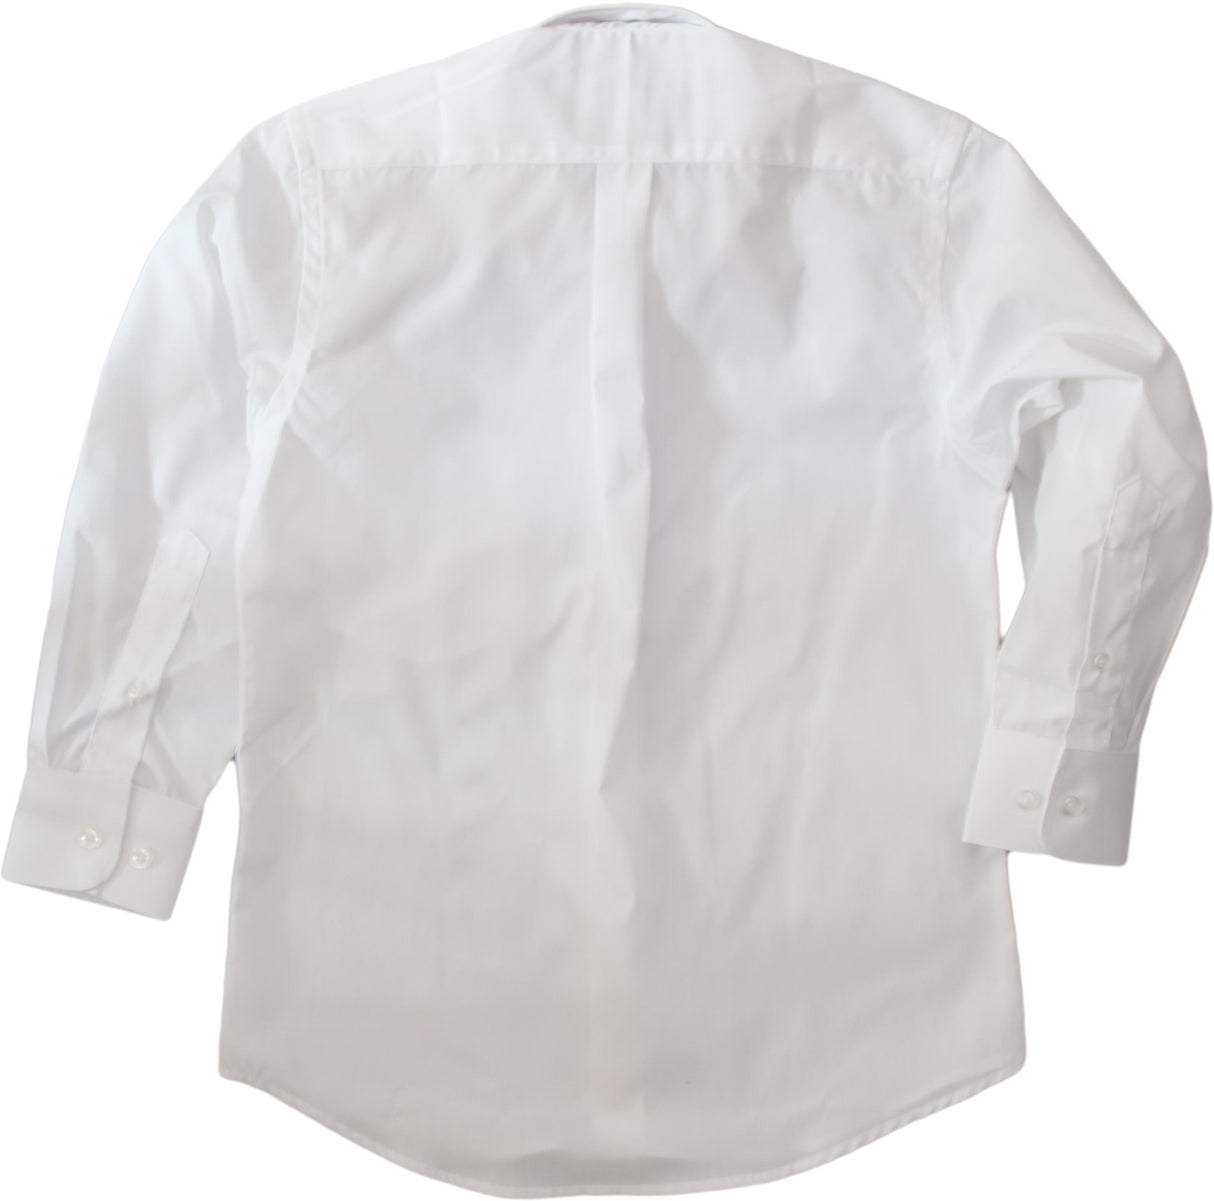 Concord Mens Long Sleeve White Dress Shirt